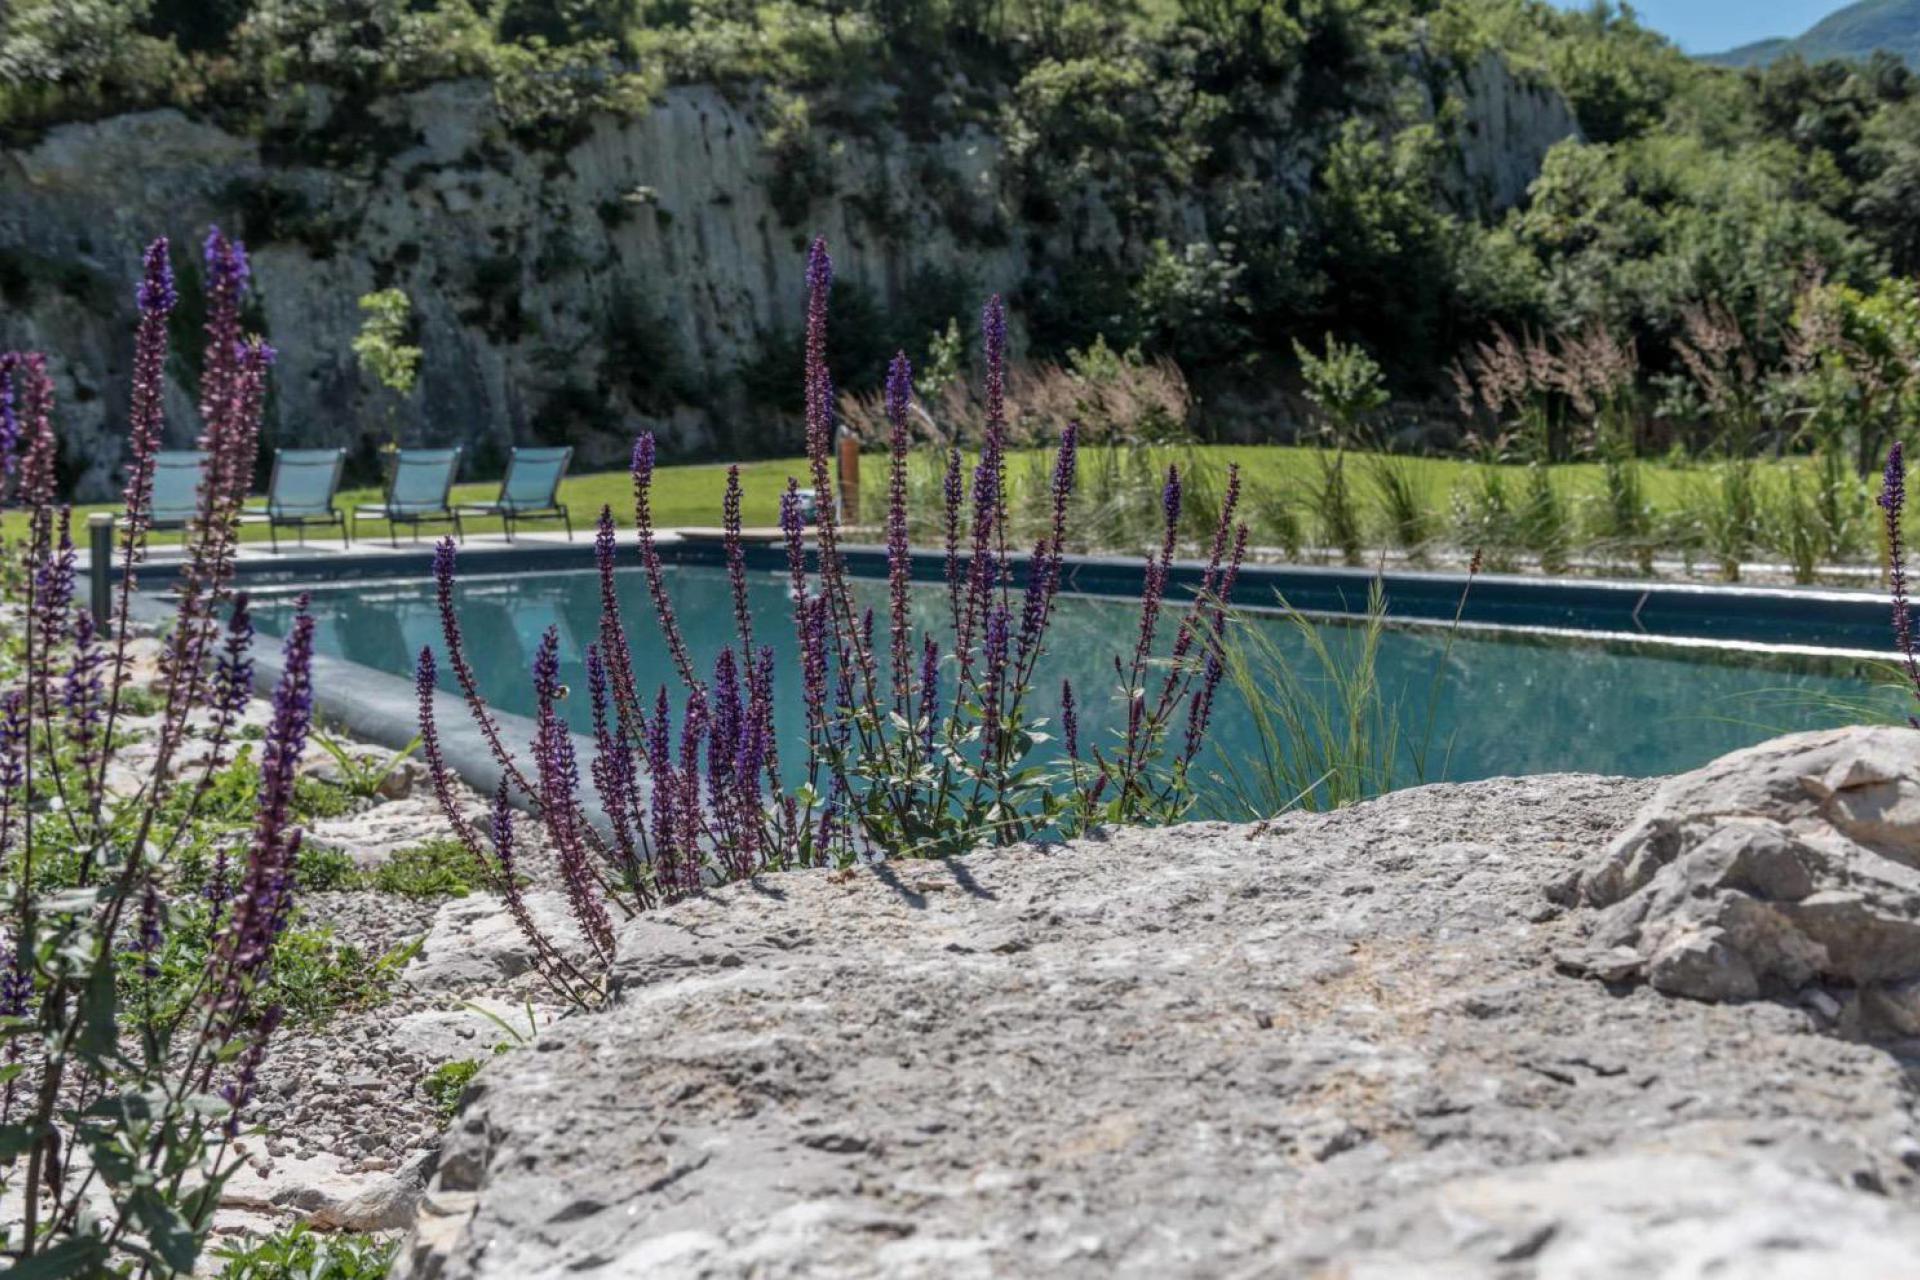 Agriturismo Dolomites Organic apple-agriturismo in the lake valley of Trentino